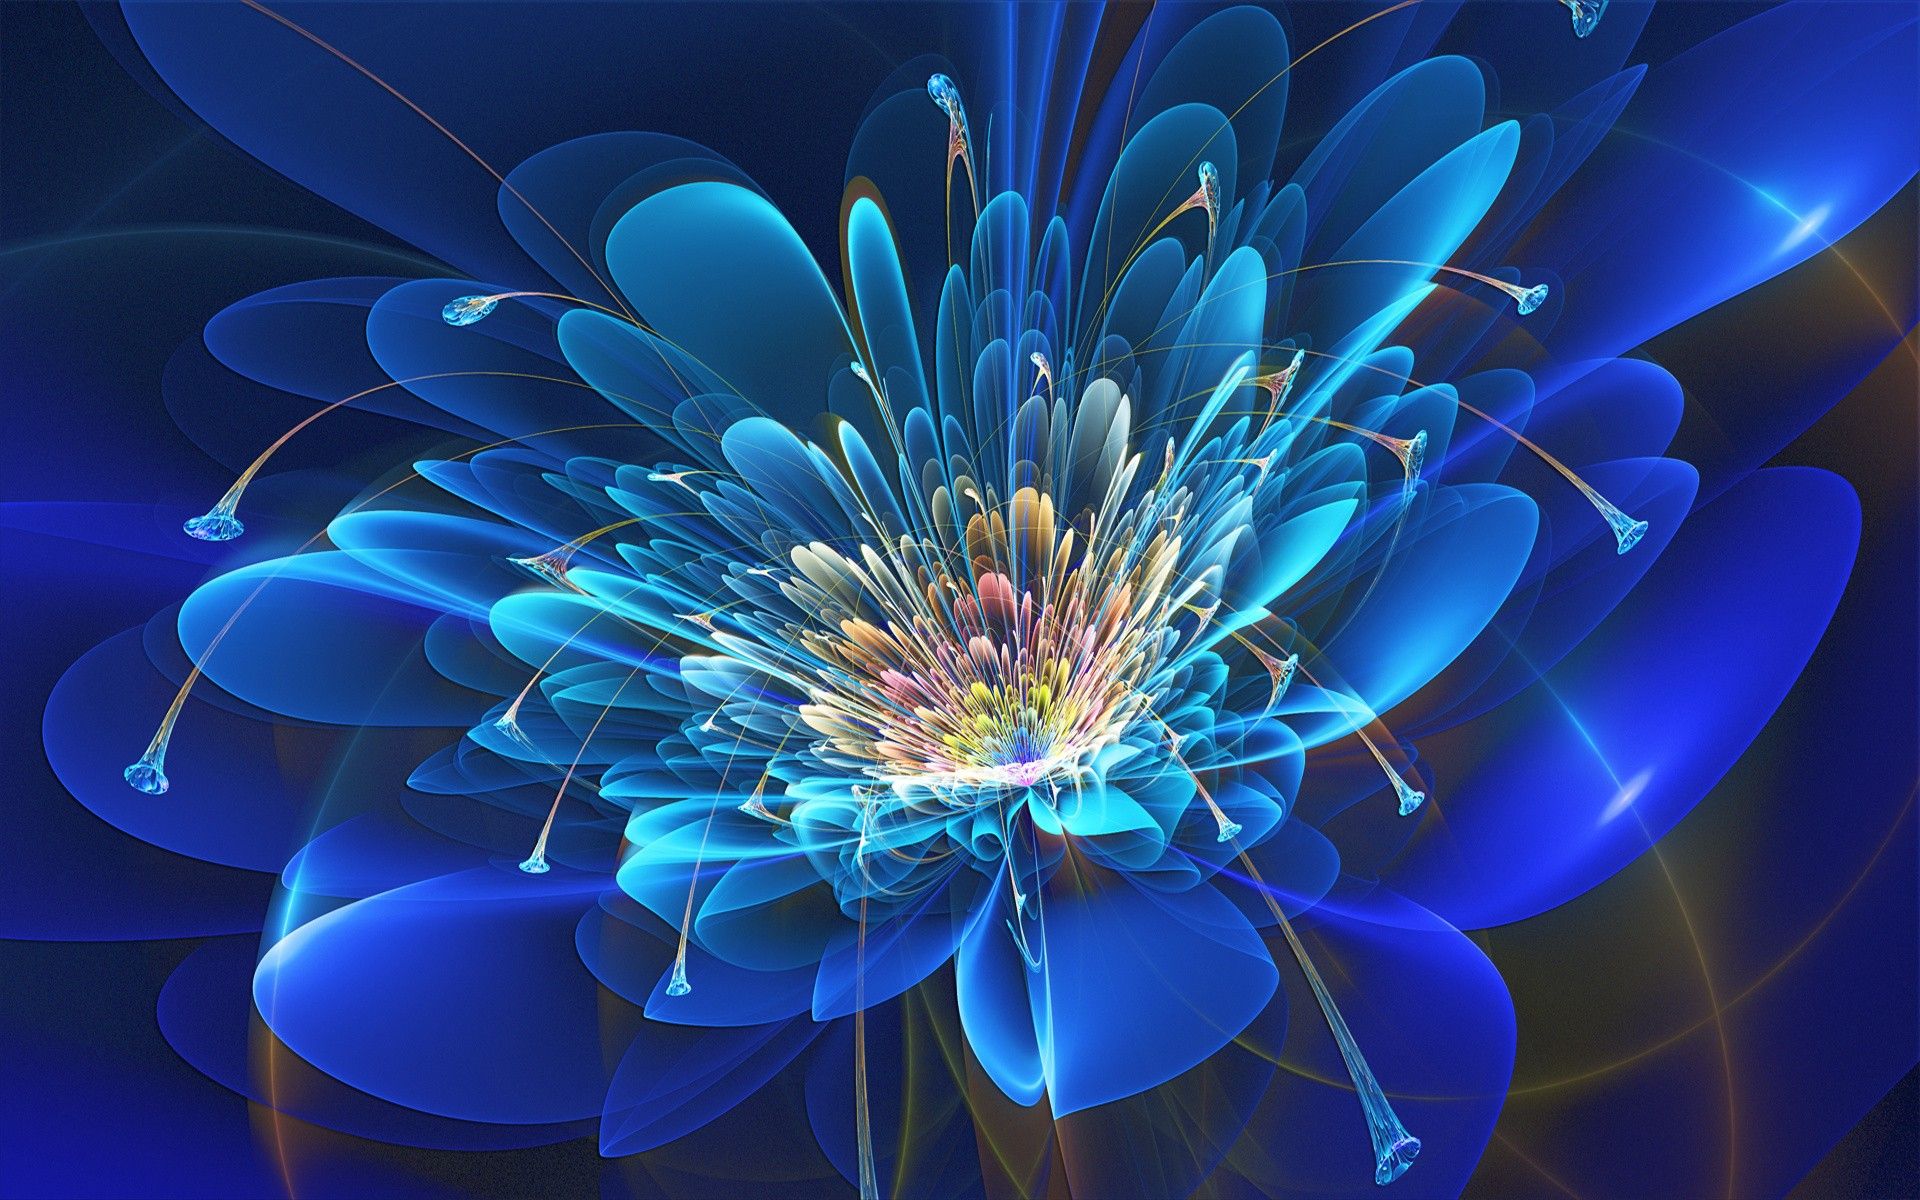 Blue Fractal Flower Wallpapers